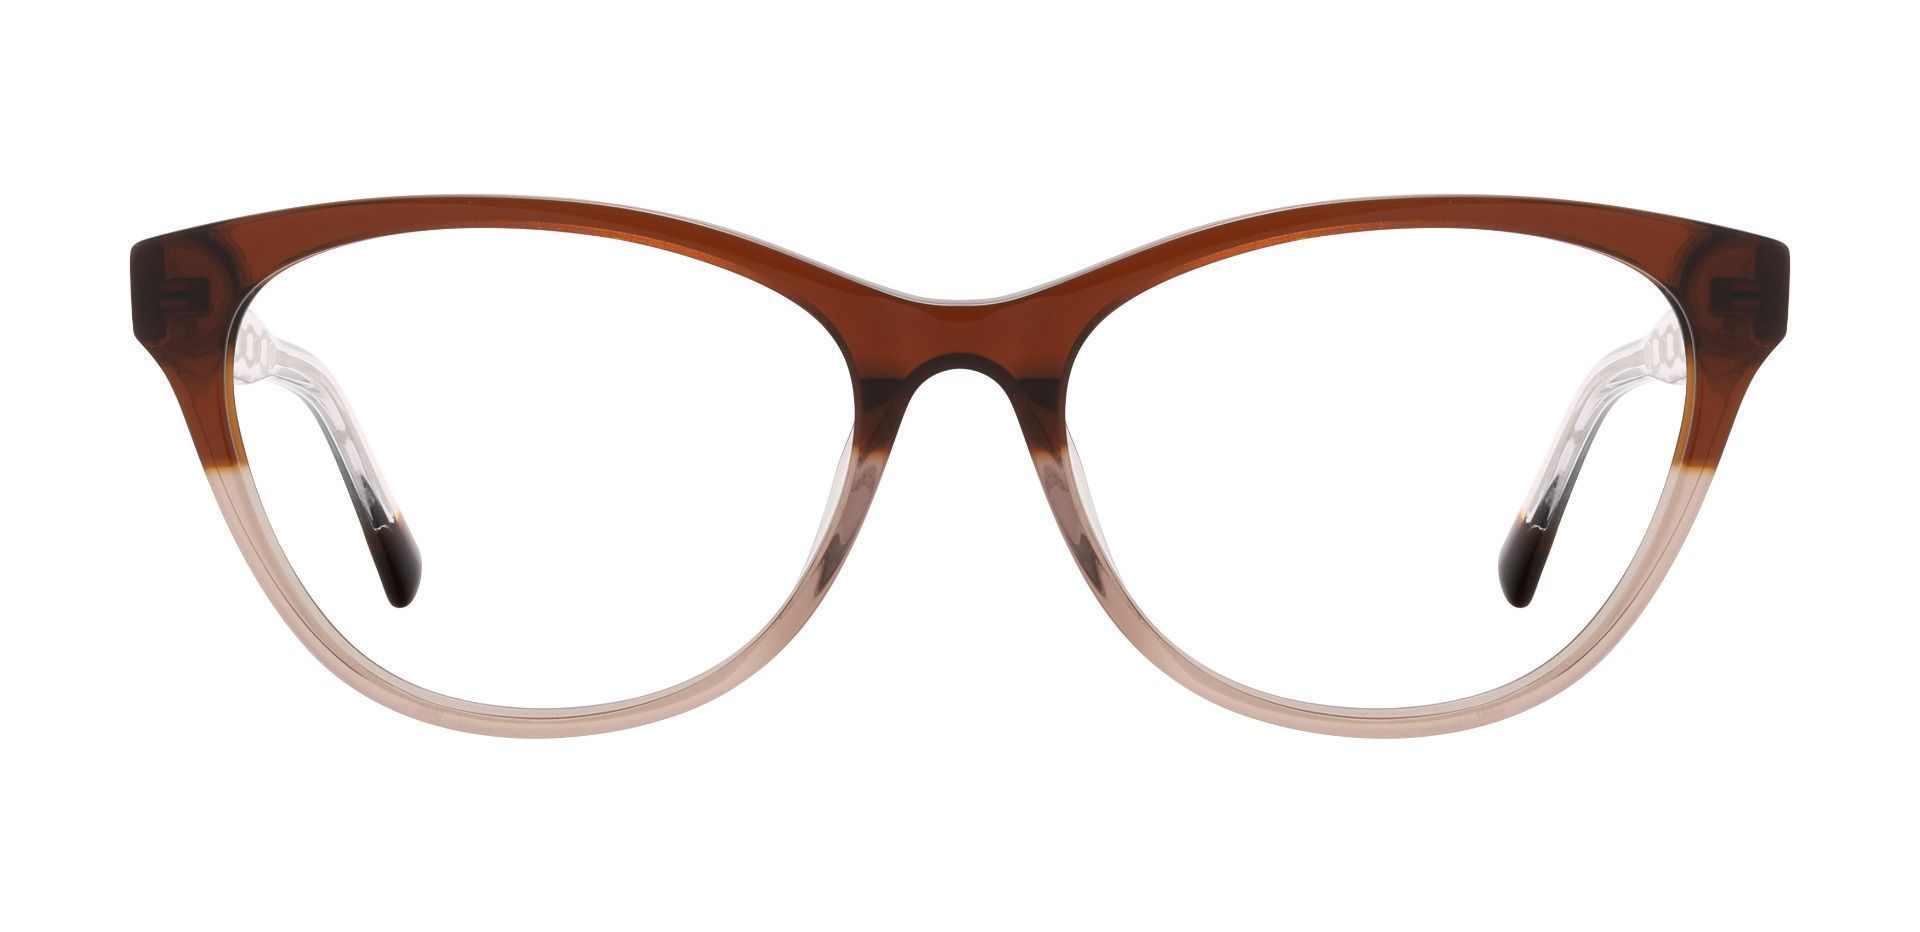 Knoxville Cat Eye Prescription Glasses - Brown